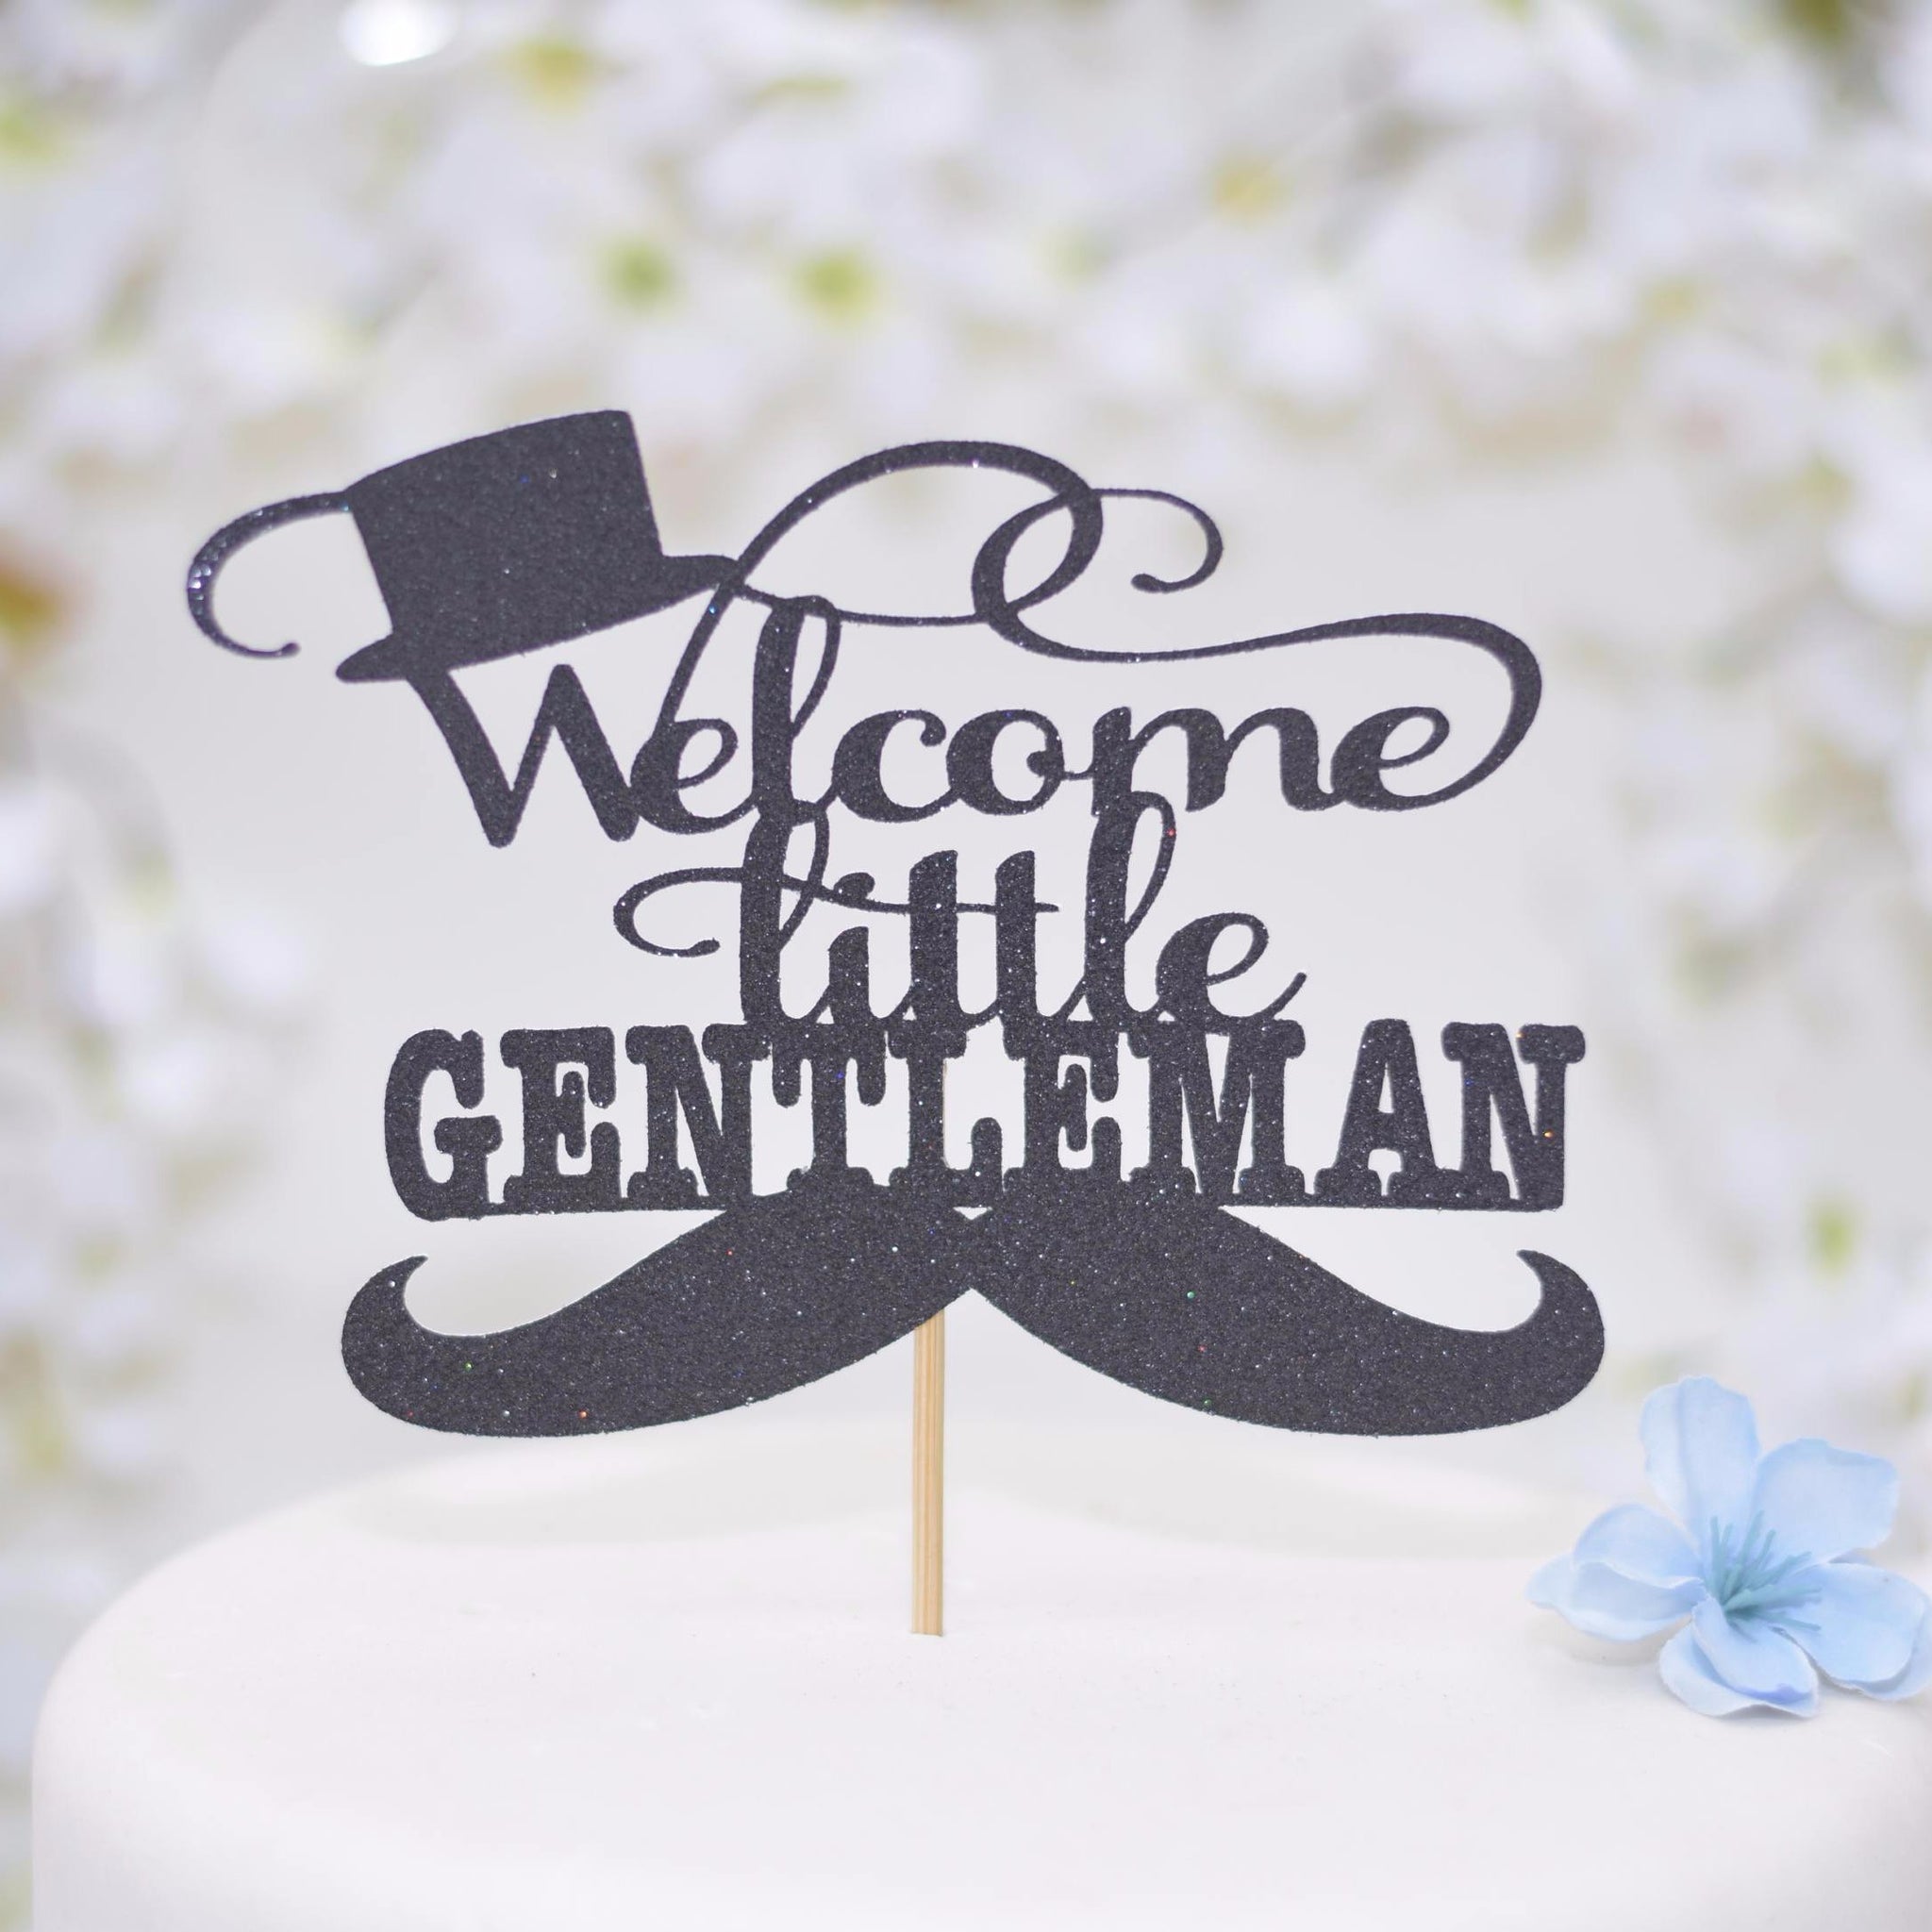 Gentleman 1 tier Cake – Da Cakes Houston